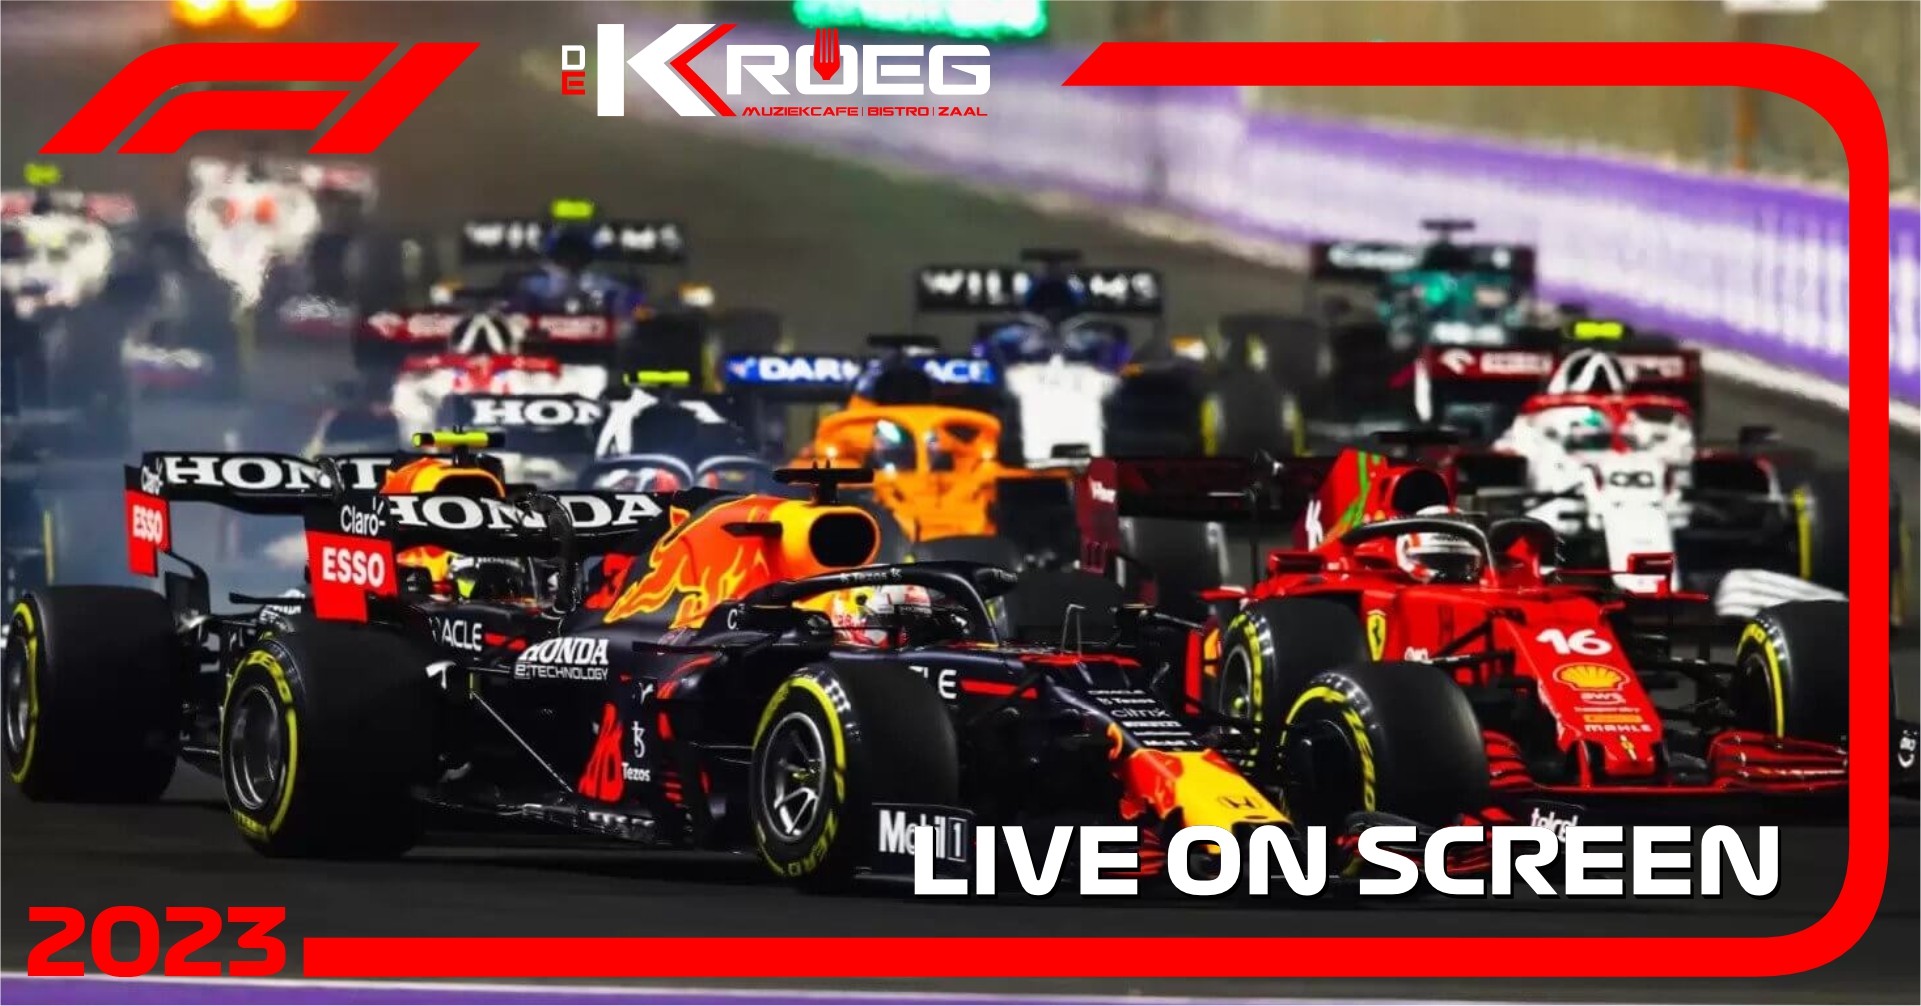 Formule 1 Live on screen